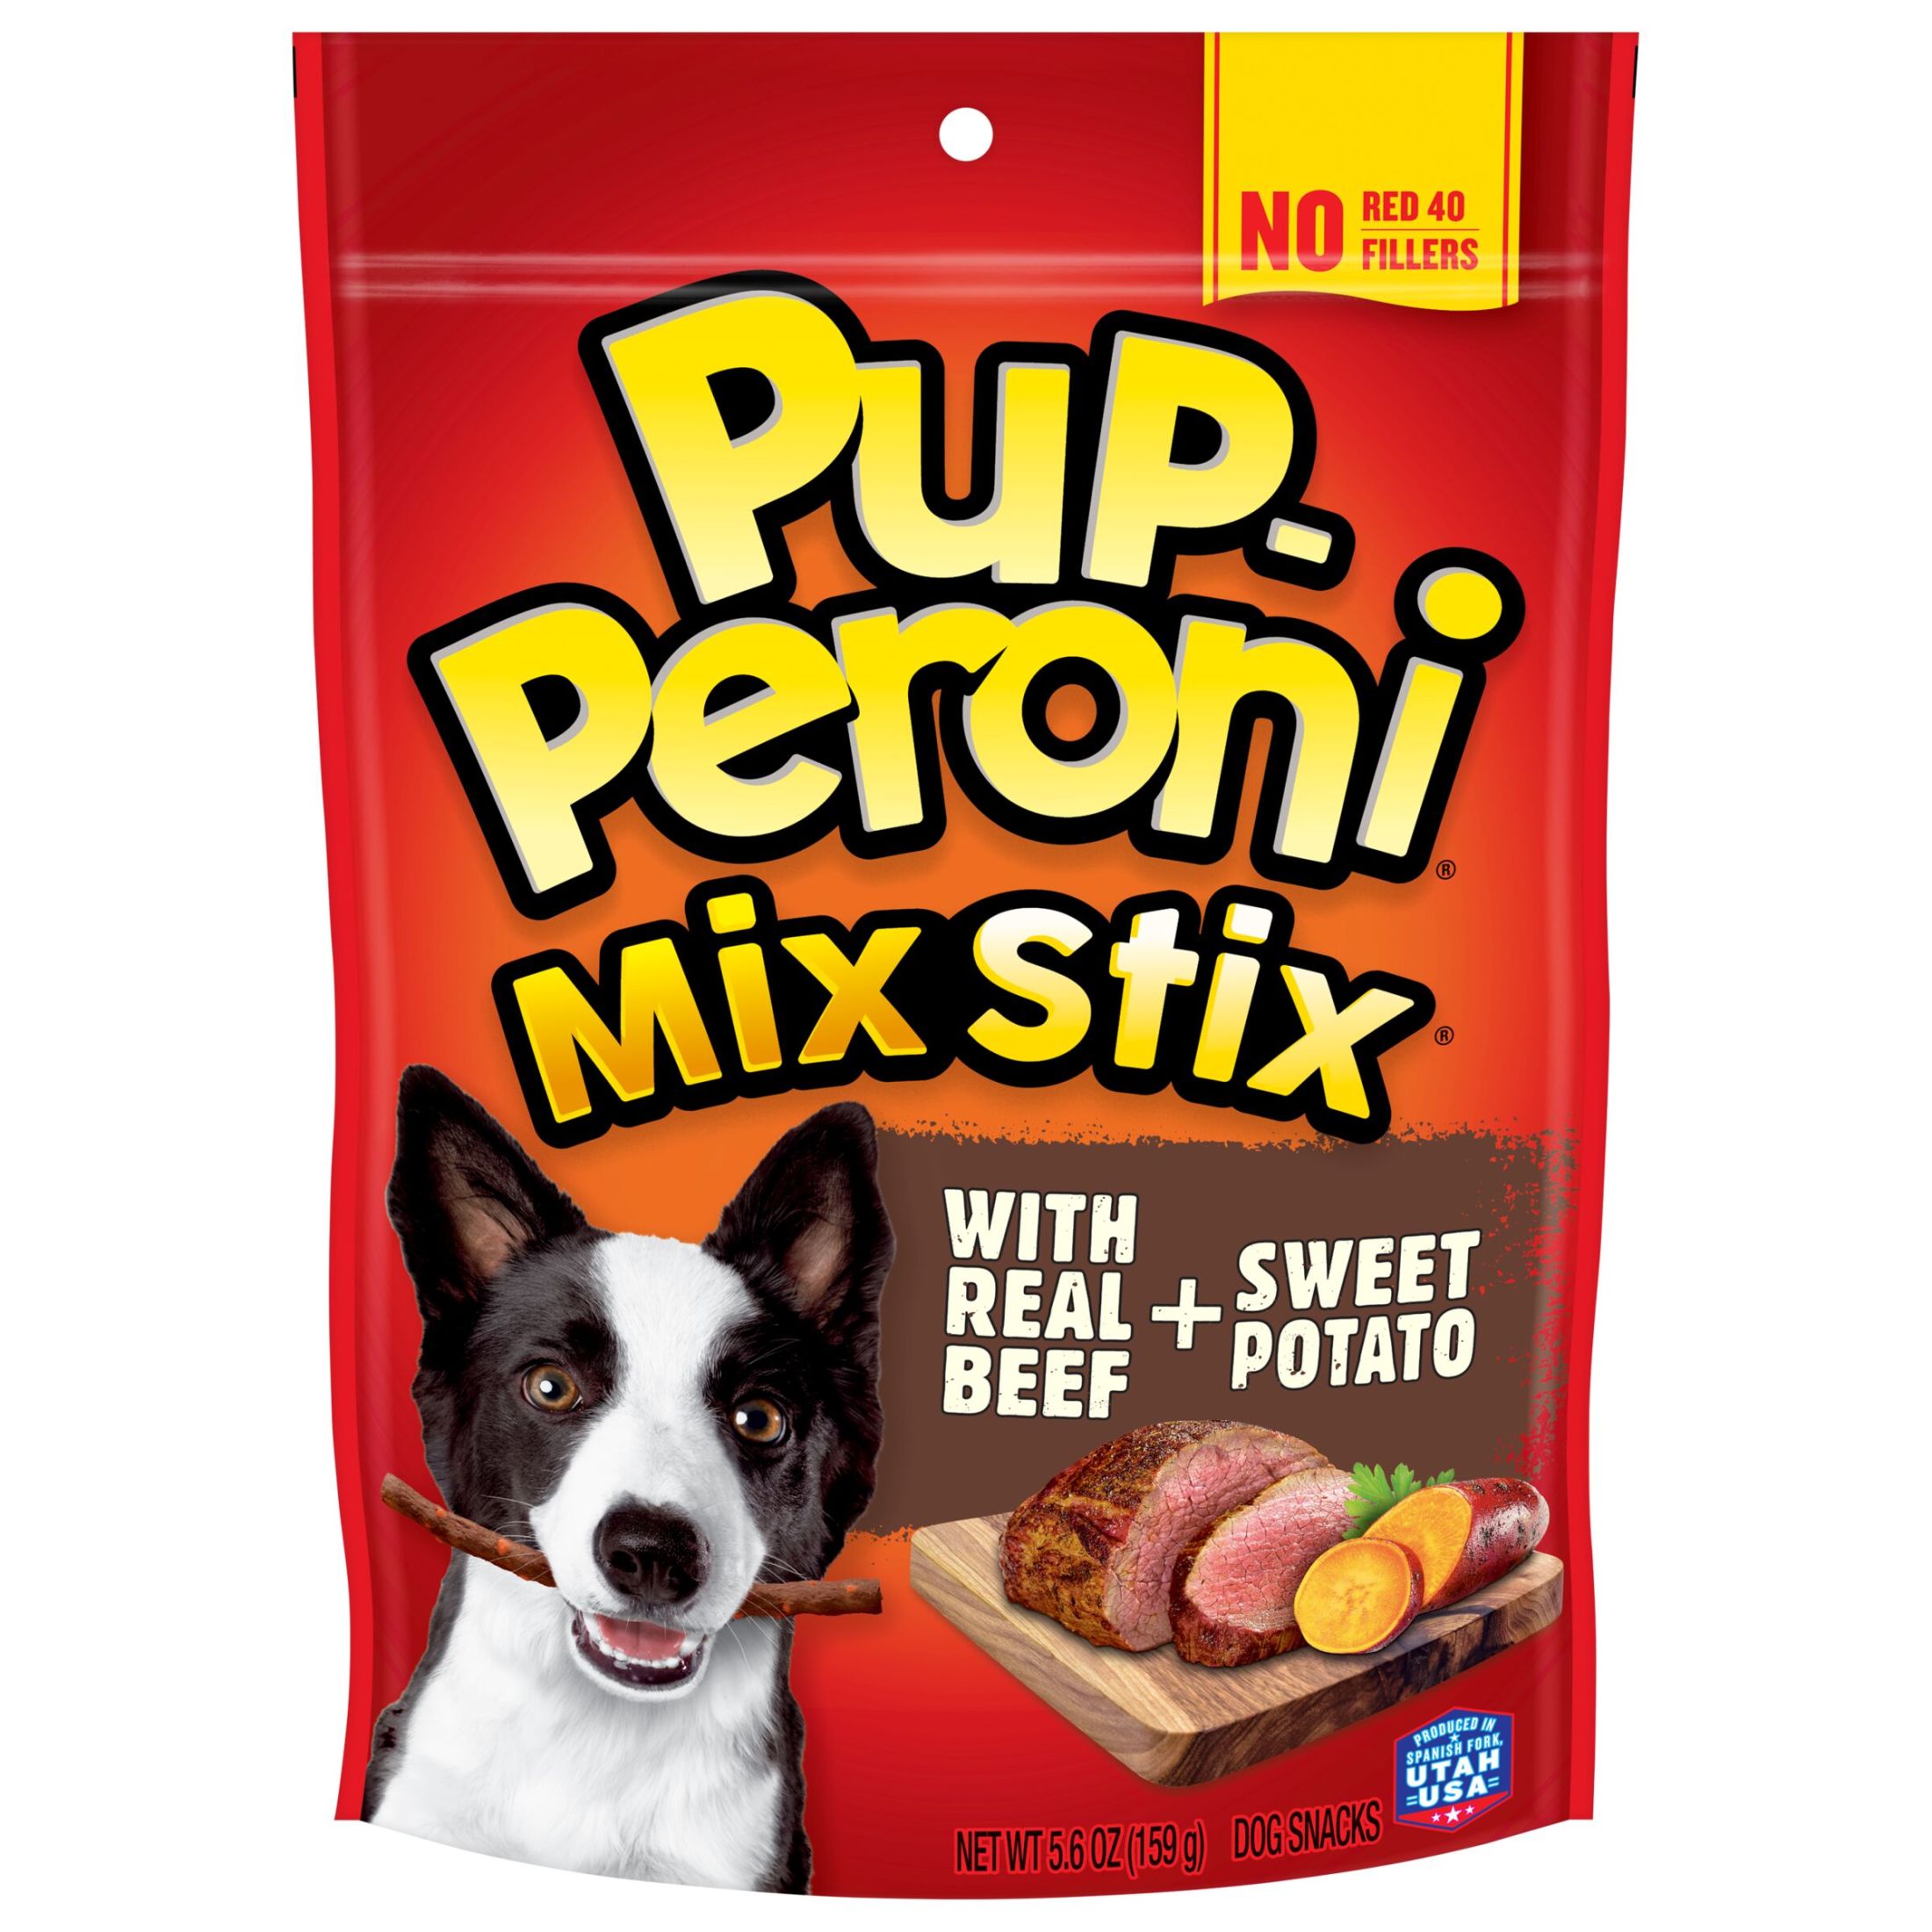 Pup-peroni Mix Stix with Real Beef and Sweet Potato Dog Treats, 5.6 oz Bag - image 1 of 9